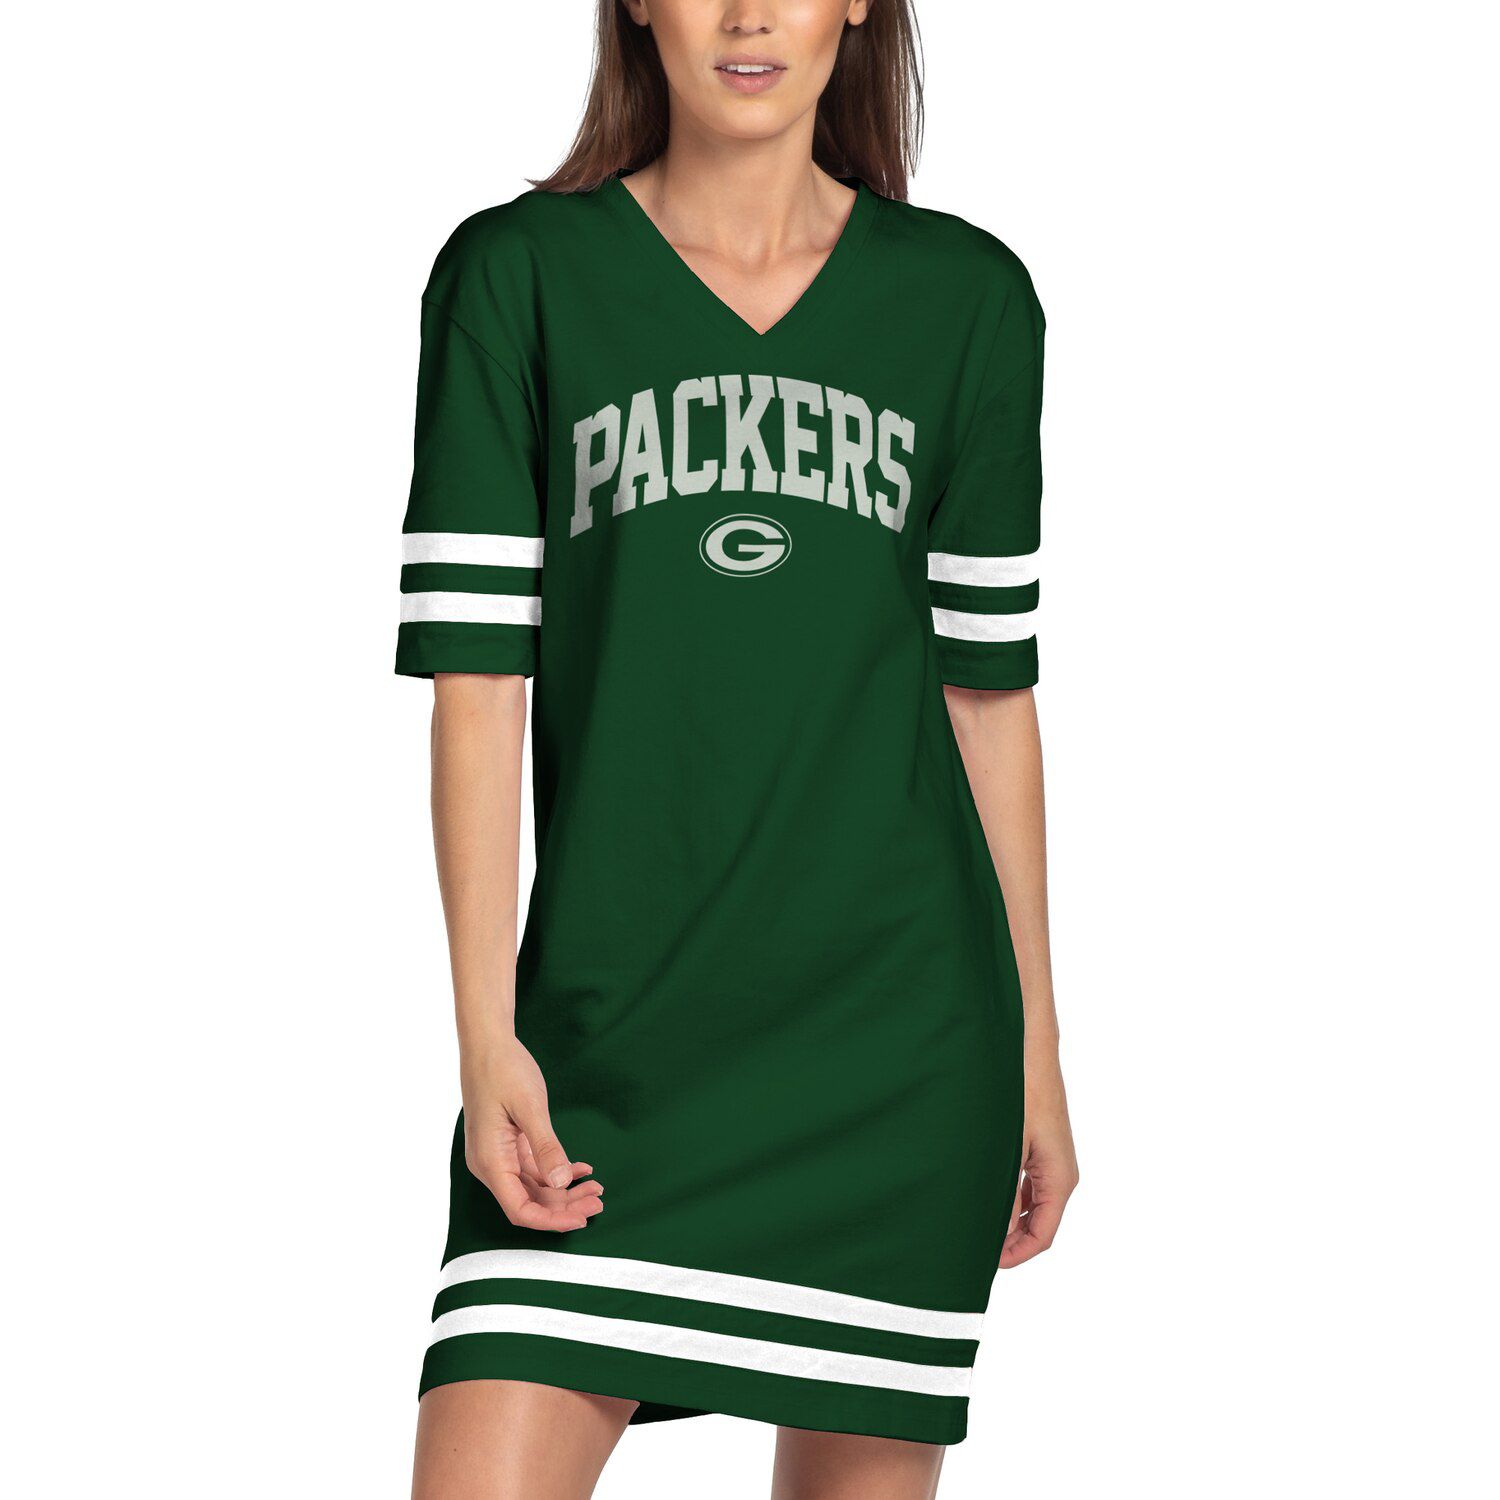 green bay packers jersey dress